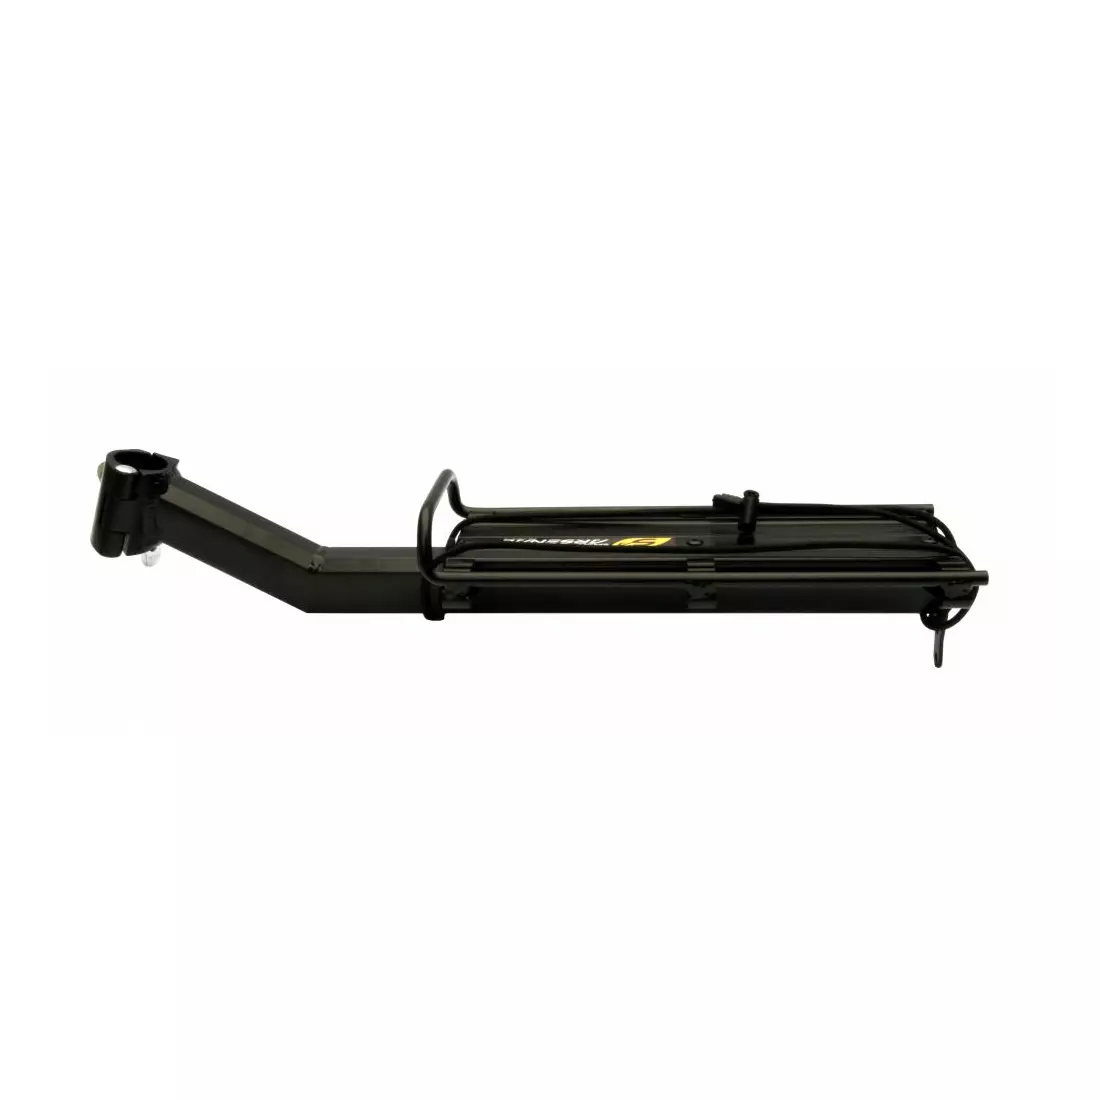 SPORT ARSENAL 250 Aluminum seat tube rack - black